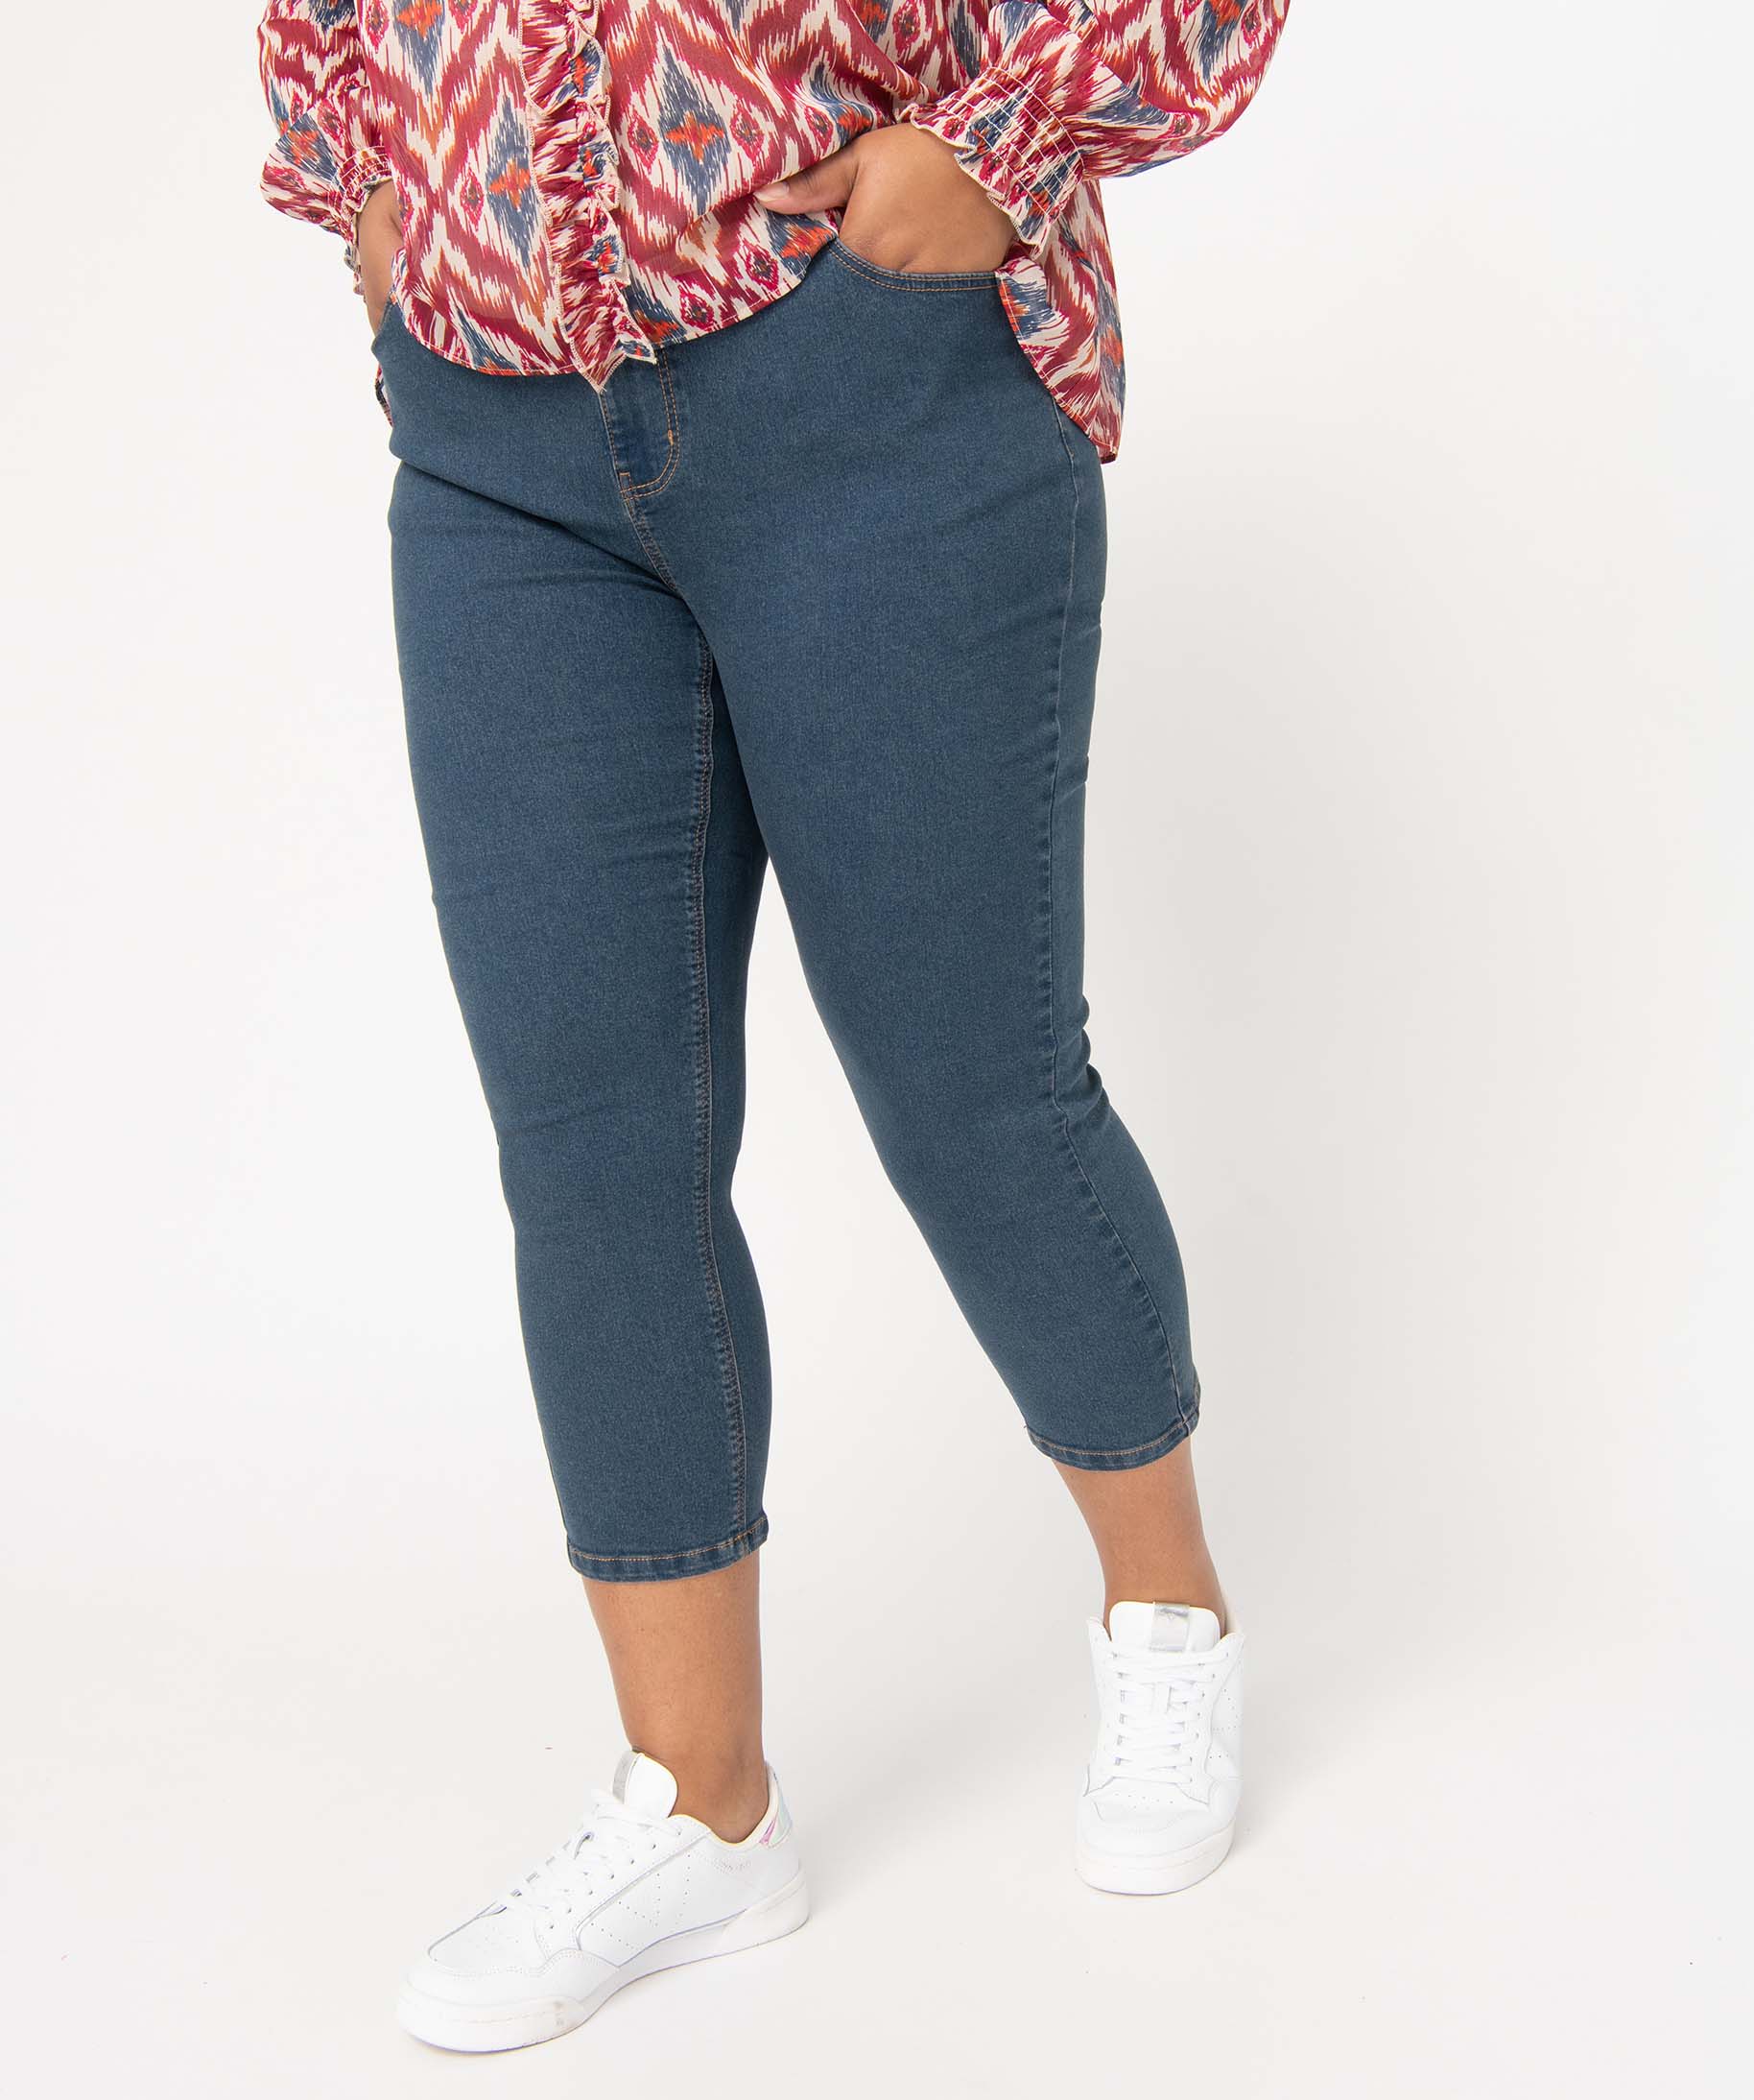 pantacourt en jean femme grande taille en denim stretch bleu pantacourts